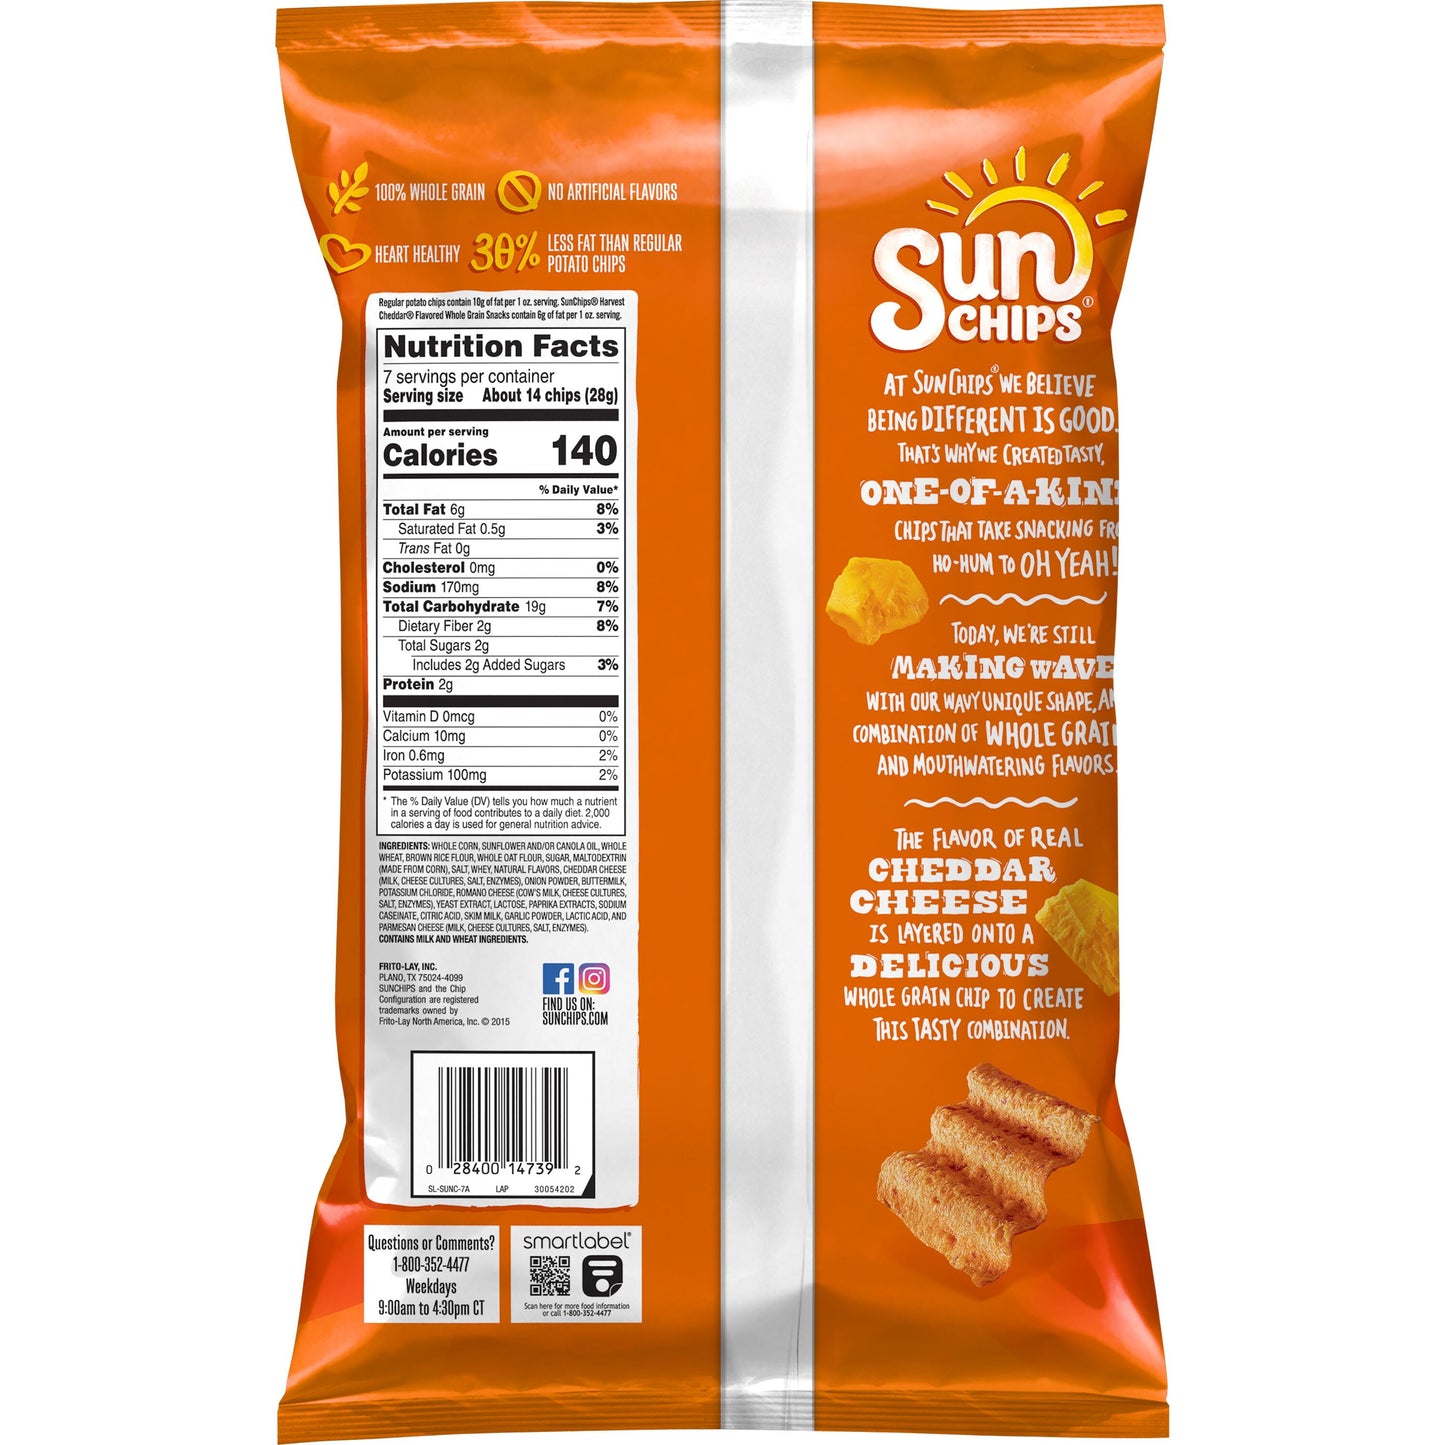 SunChips Harvest Cheddar Whole Grain Snacks, 7 oz Bag